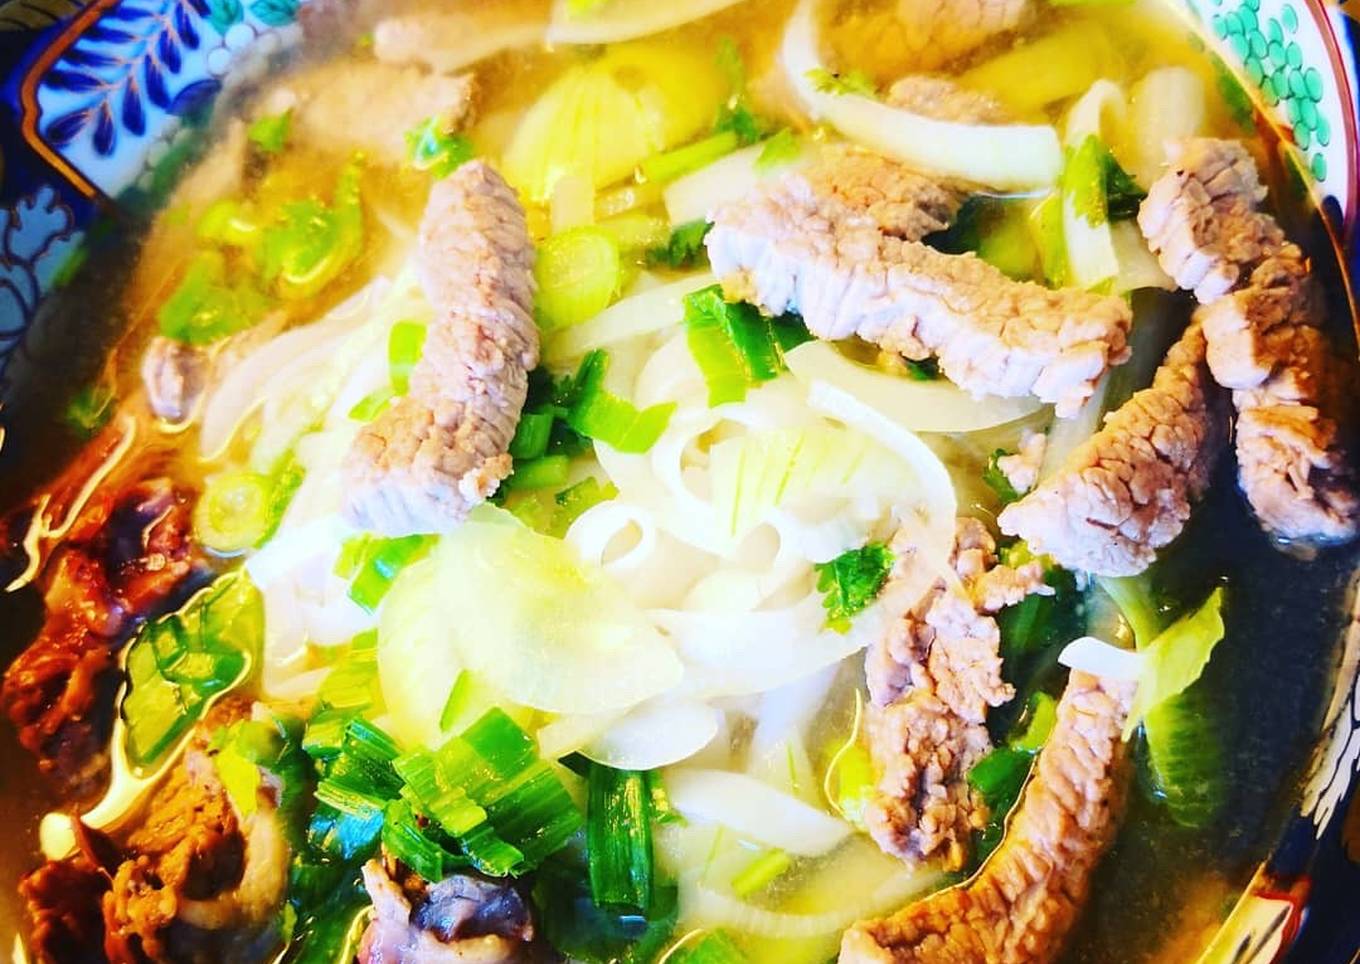 Quick Pho recipe
Vietnamese beef noodles soup